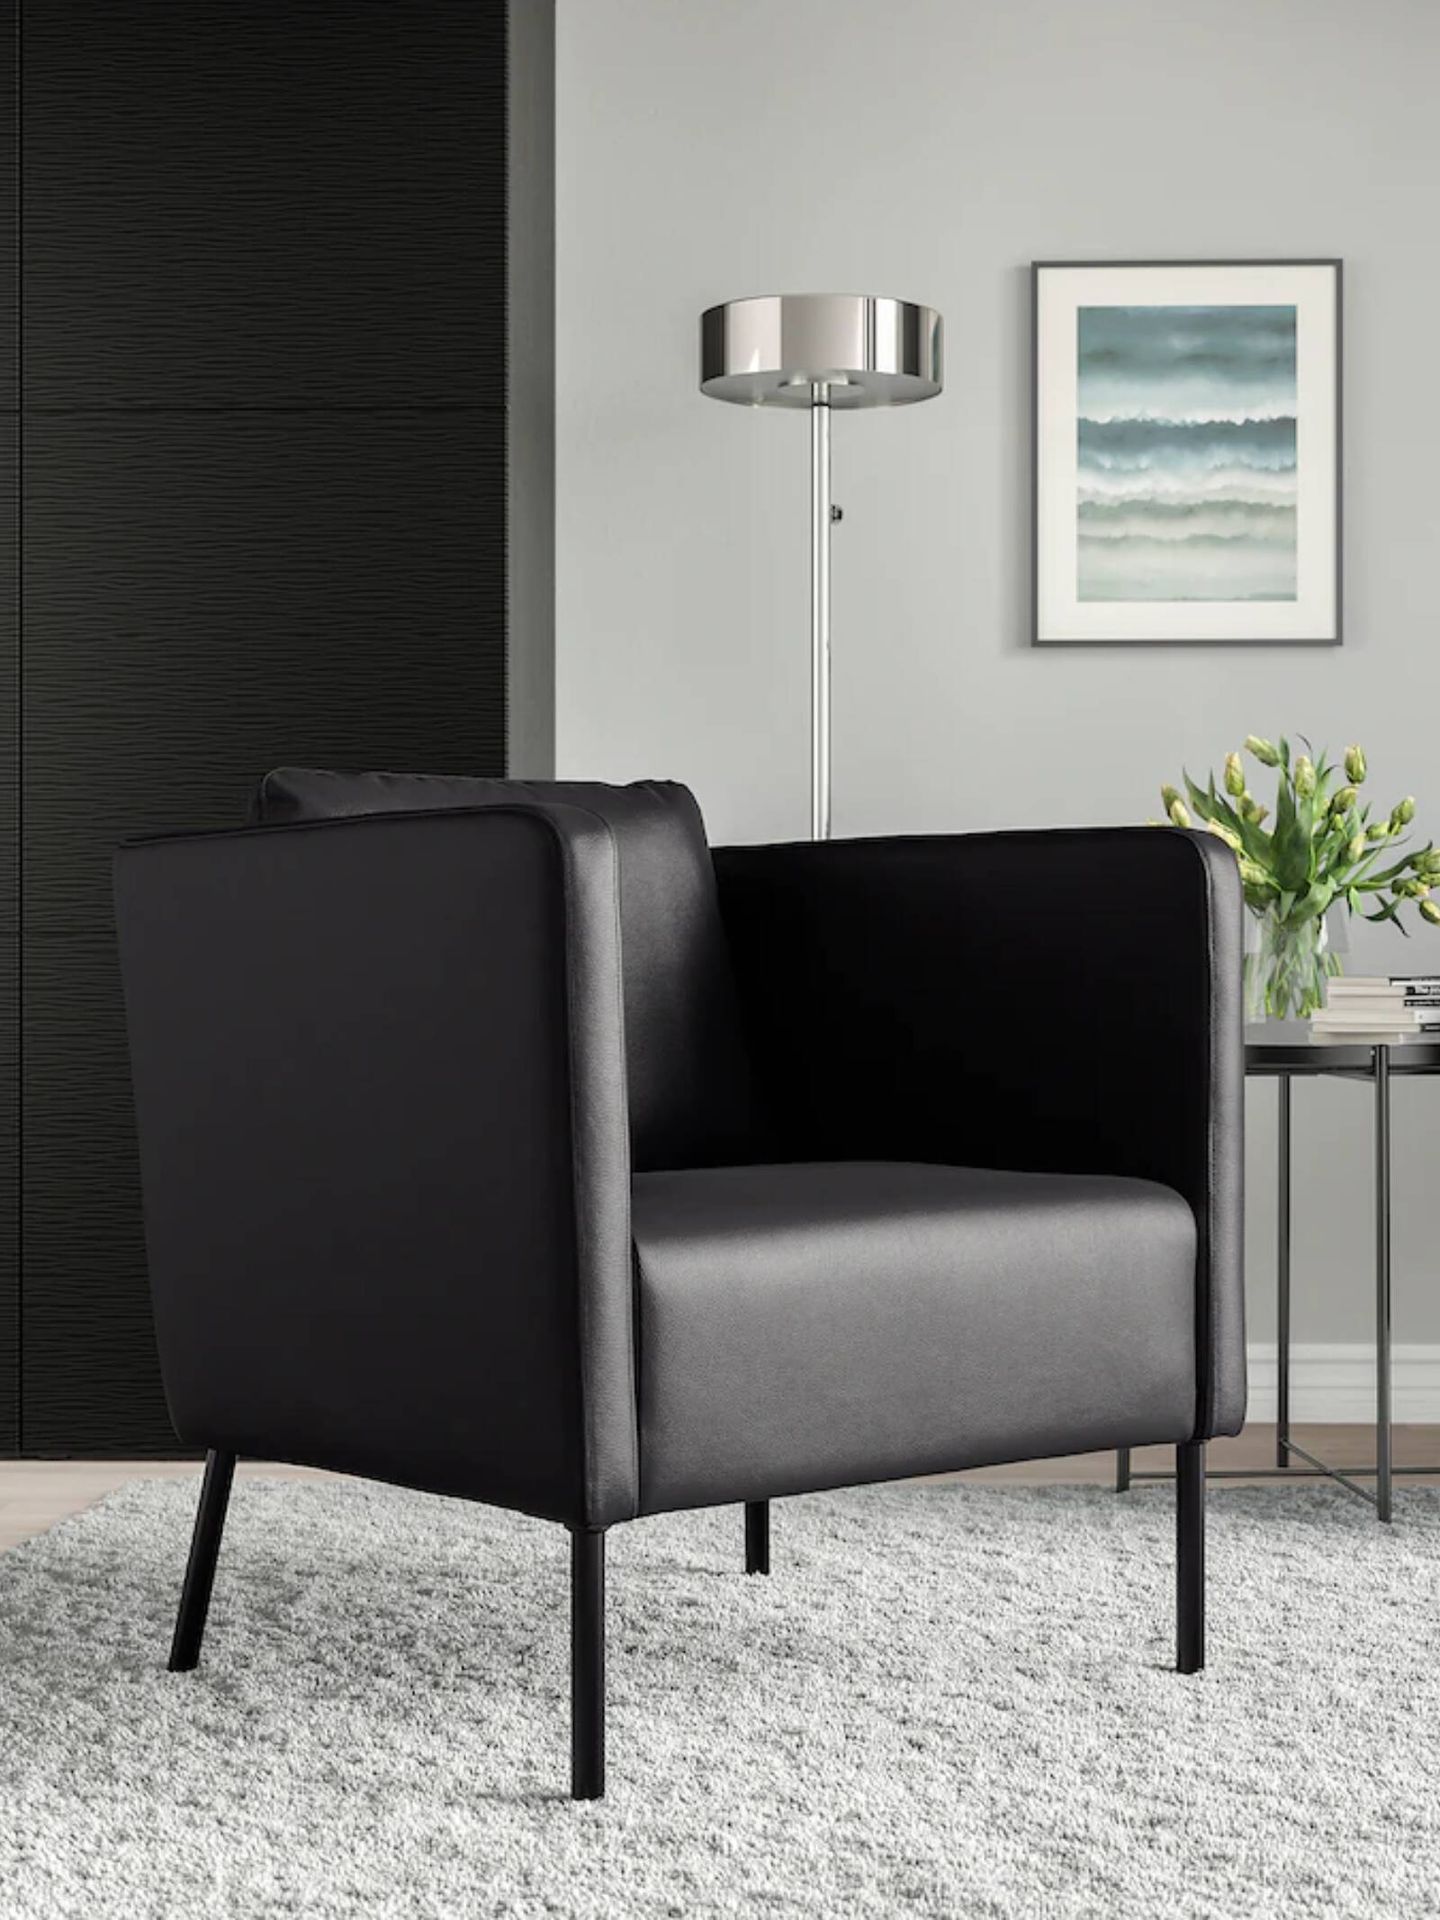 El sillón de Ikea ideal para un bonito rincón de lectura. (Cortesía)